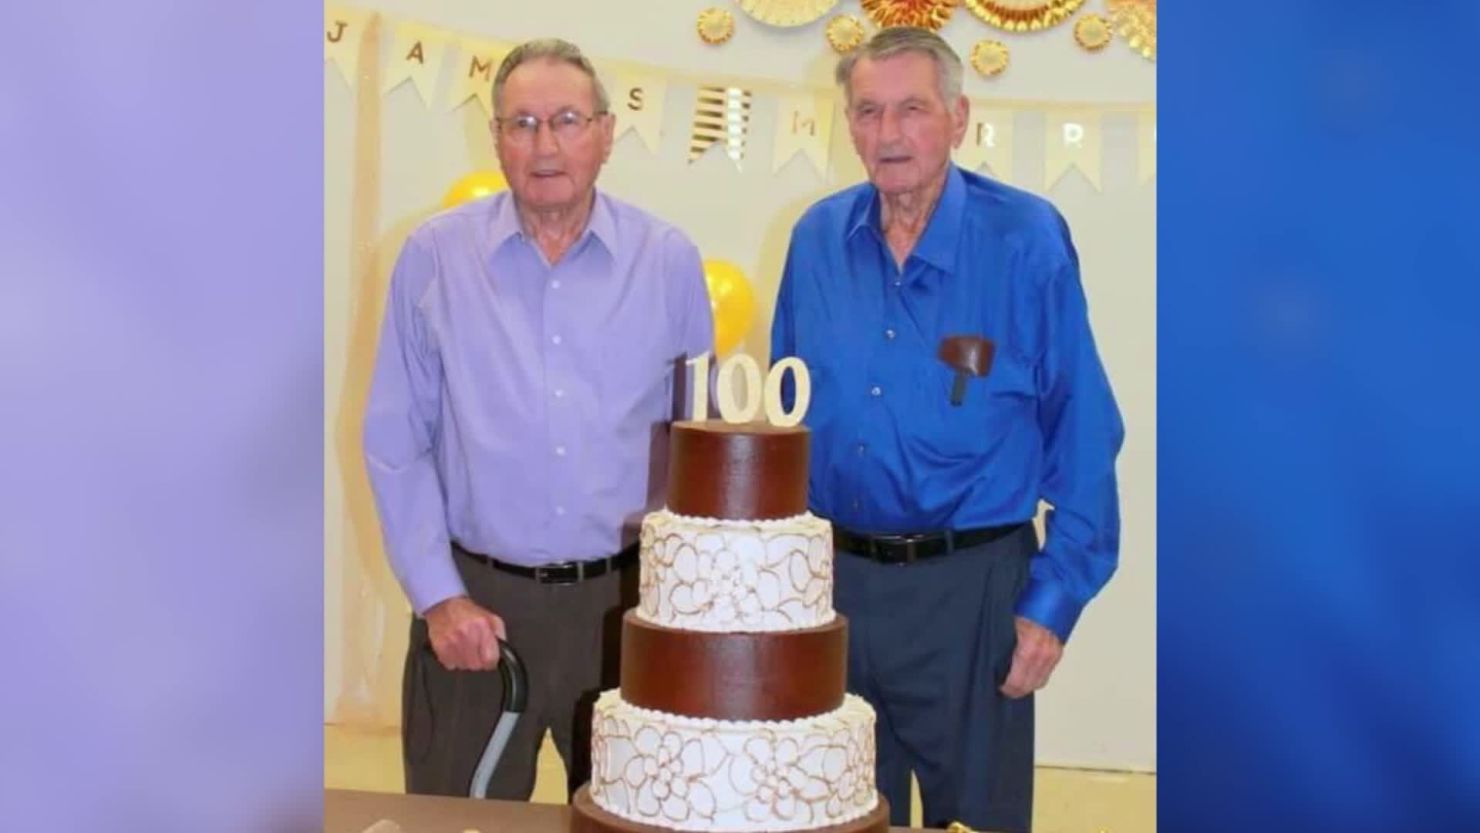 Twins in Arkansas celebrate their 100th birthday